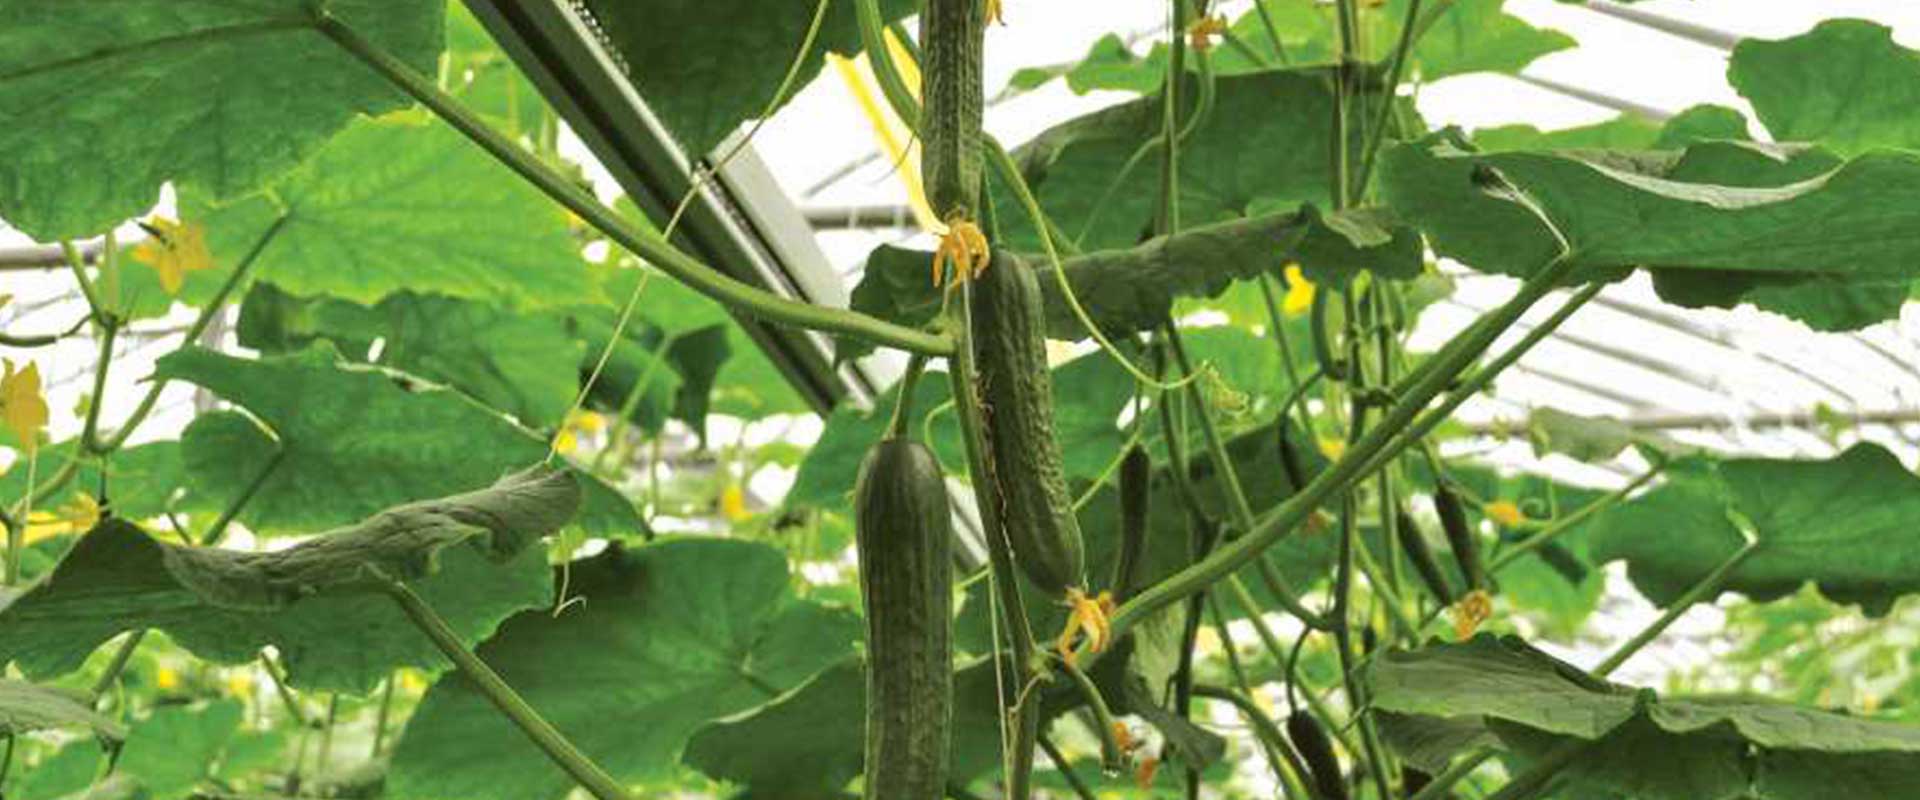 Feton LED Grow Light for Cucumber